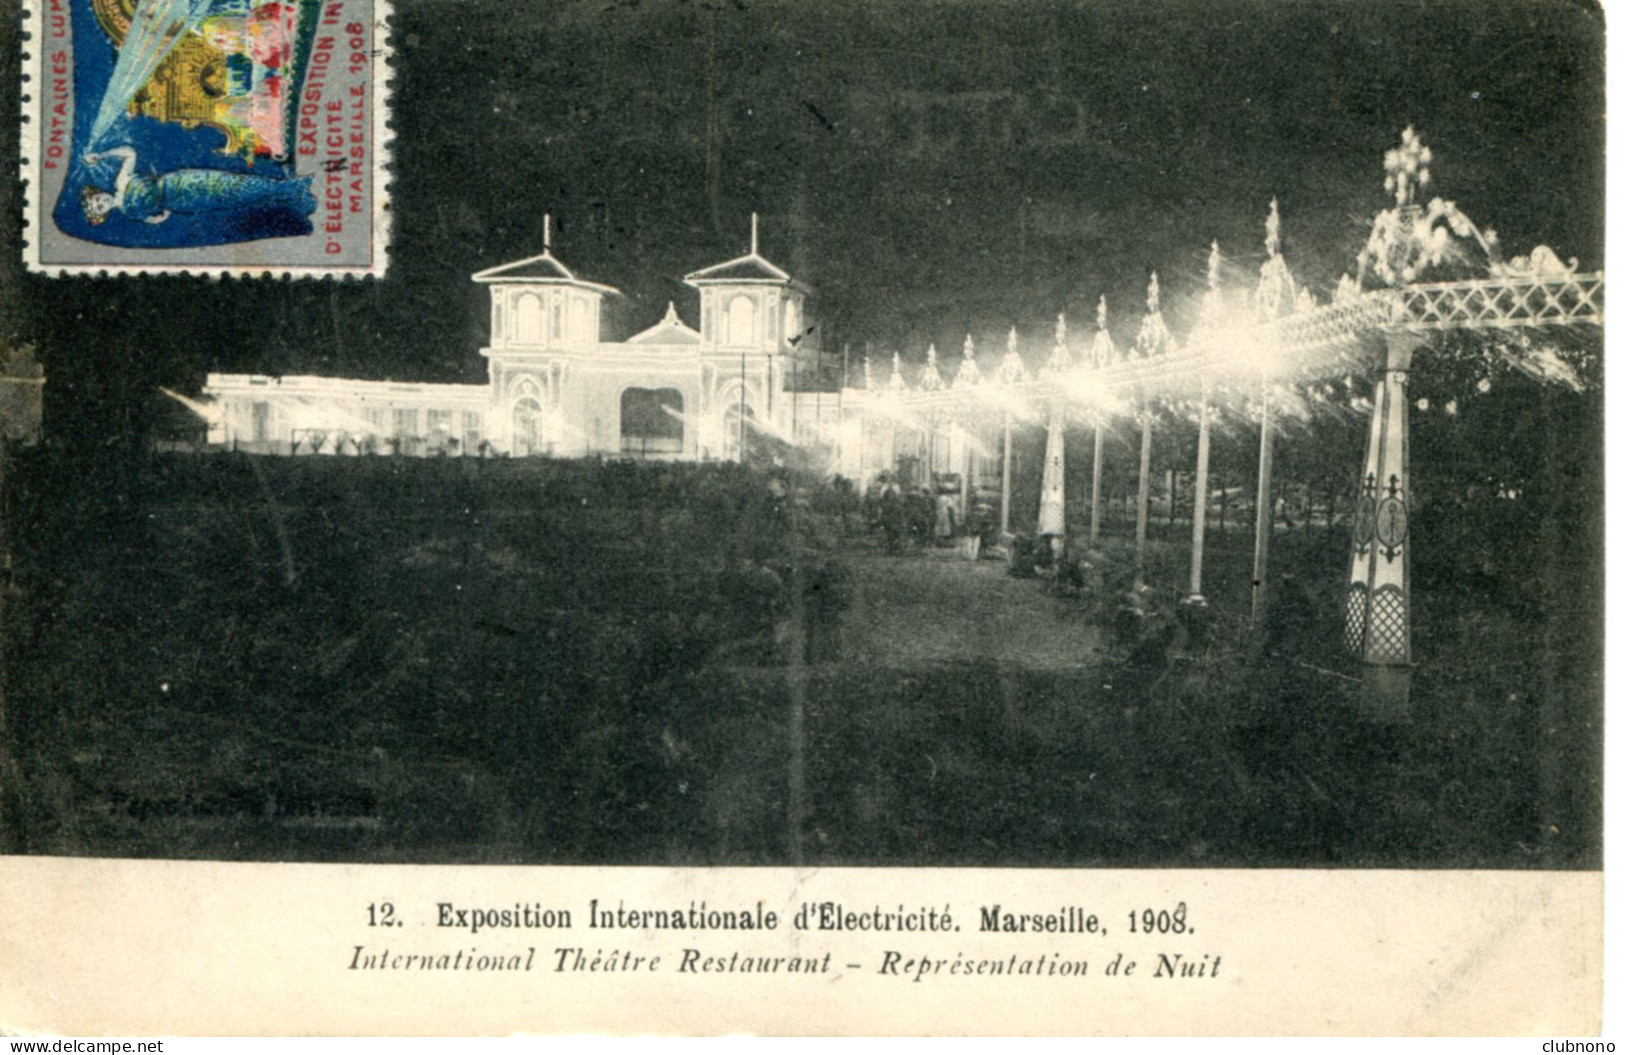 CPA - MARSEILLE - EXPO INT. D'ELECTRICITE 1908 - INTERNATIONAL THEATRE RESTAURANT DE NUIT - Weltausstellung Elektrizität 1908 U.a.